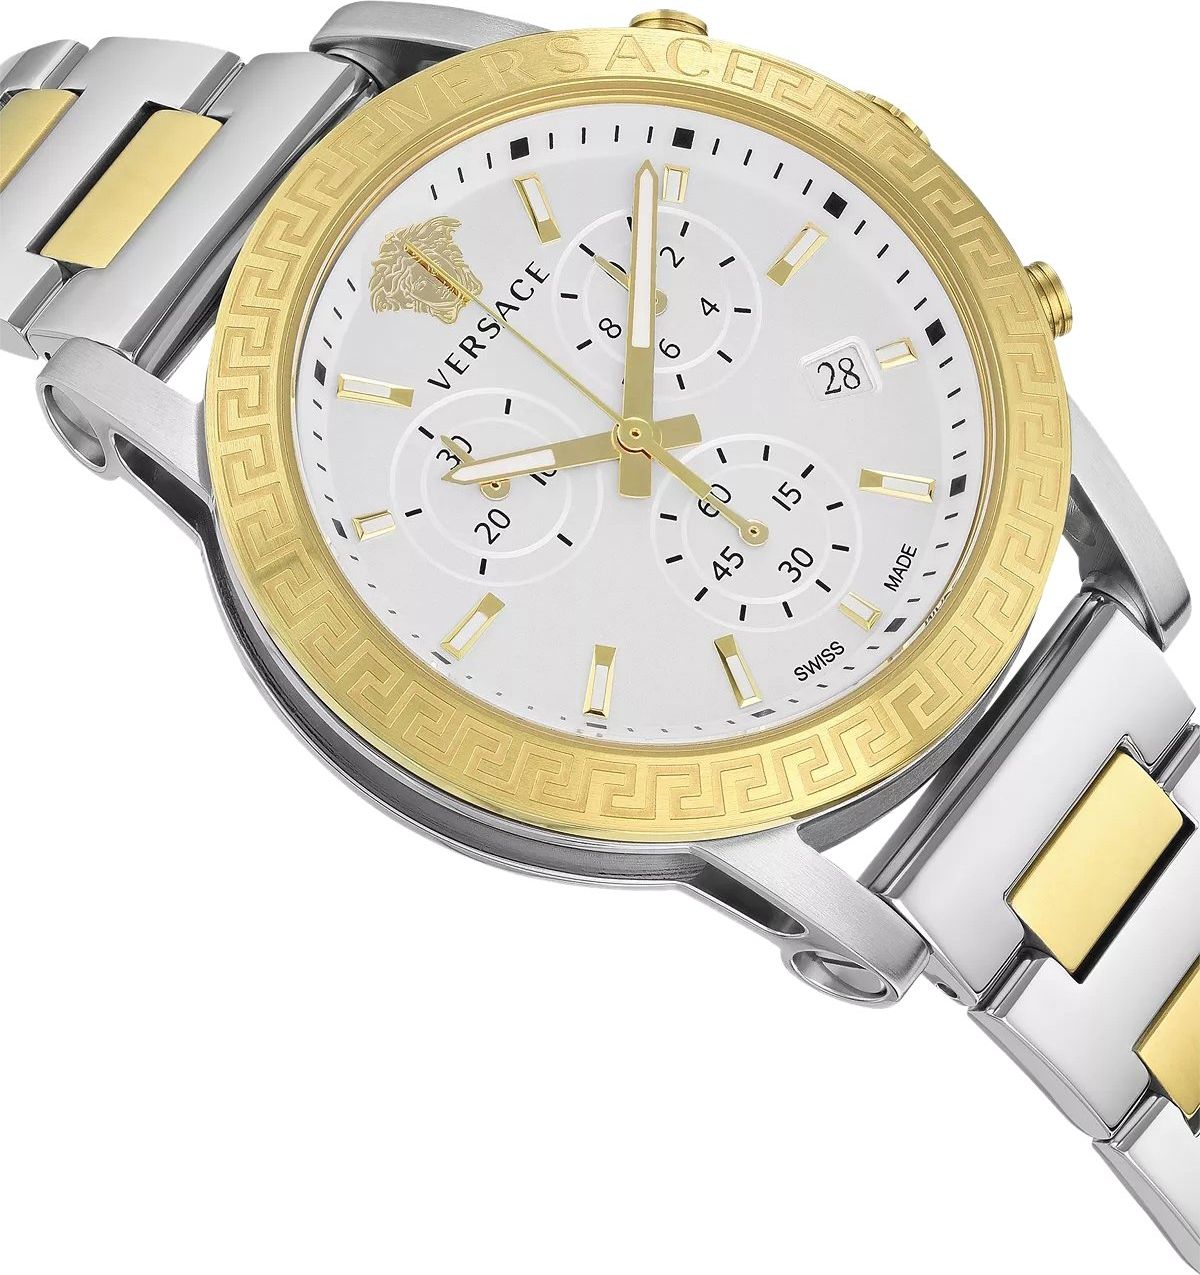 Versace VEKB00622 Sport Tech Lady Restyling horloge Wit